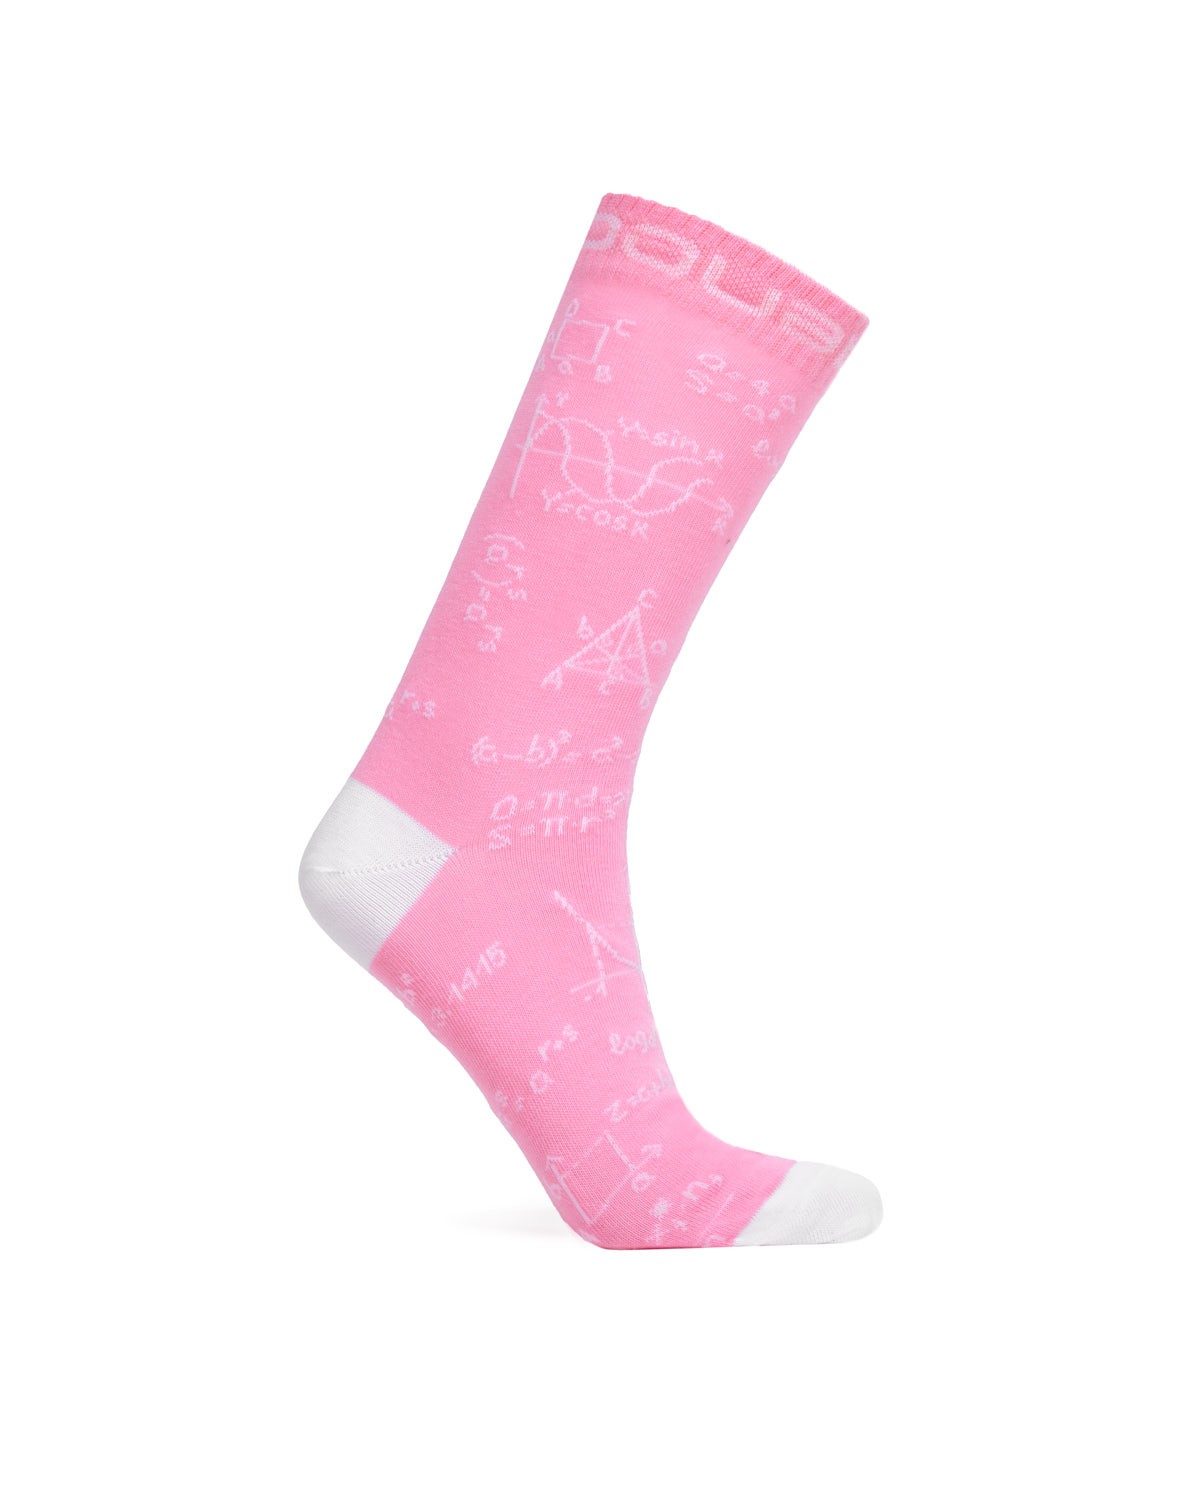 SMART Socks Pink